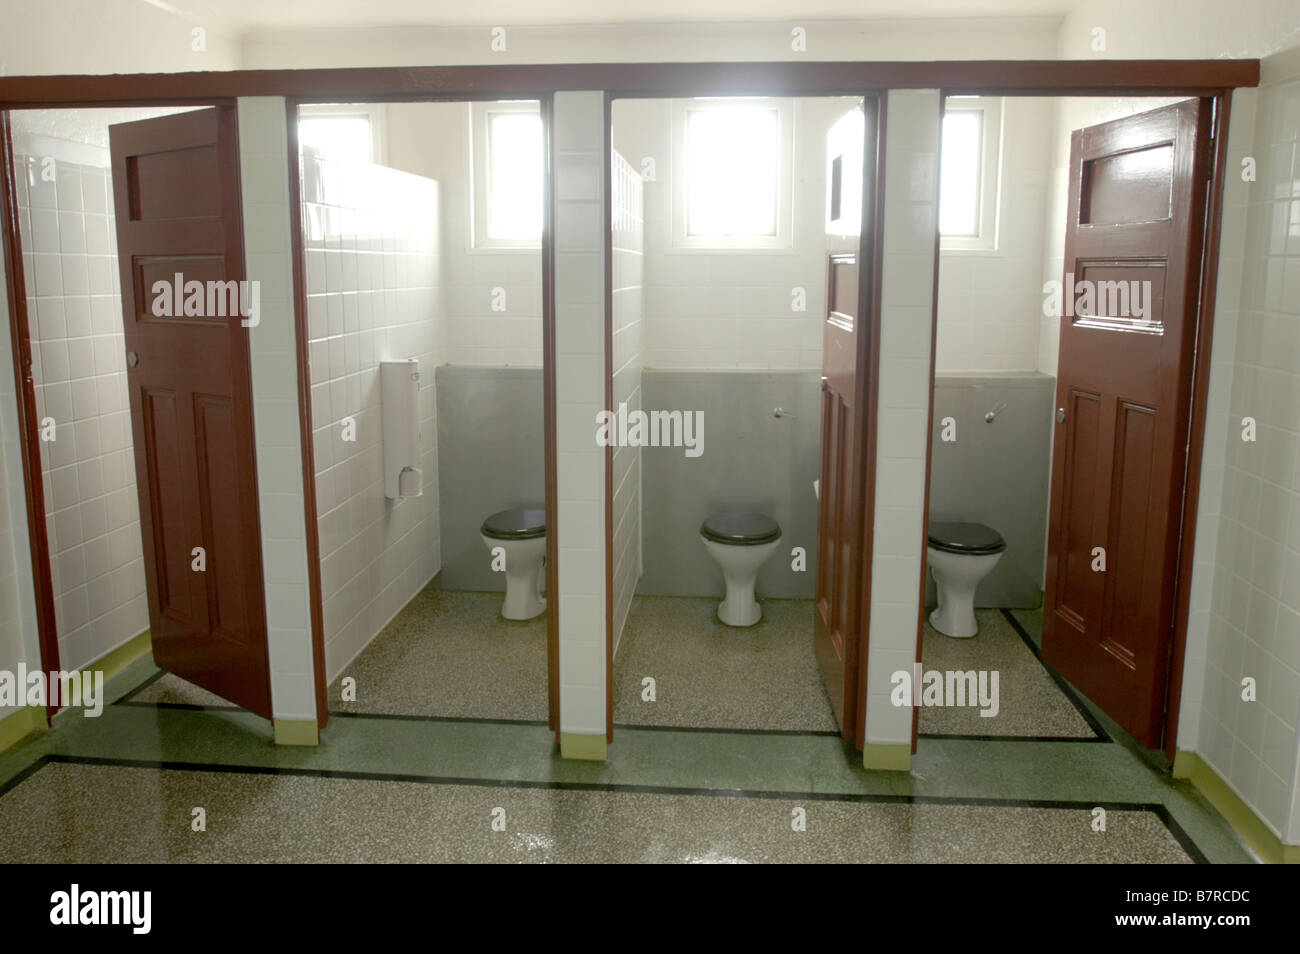 Public Toilets  with doors open. Stock Photo